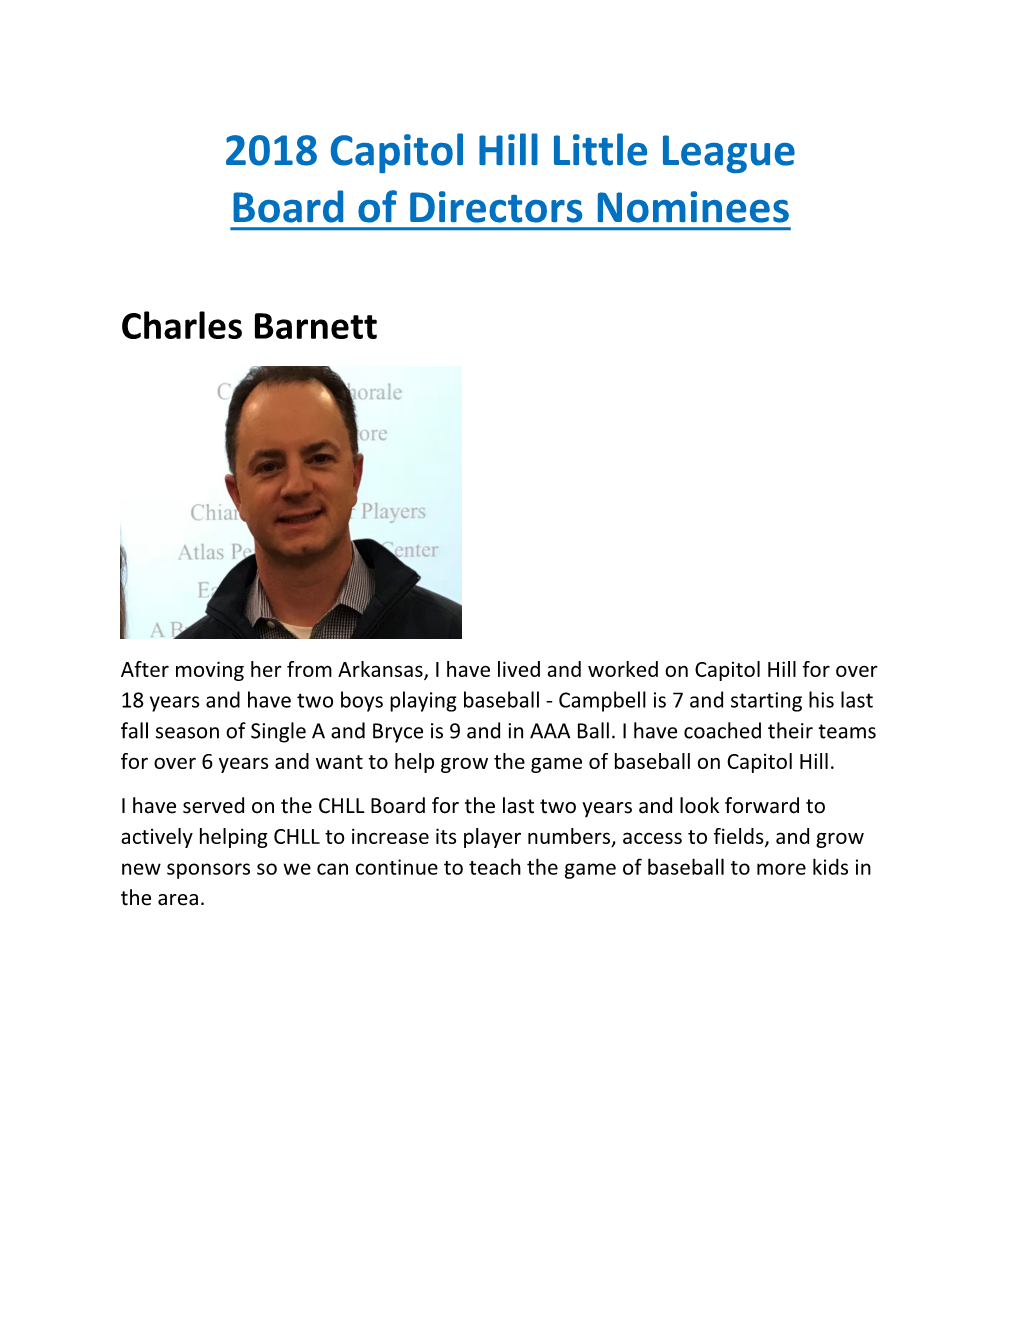 2018 Capitol Hill Little League Board of Directors Nominees